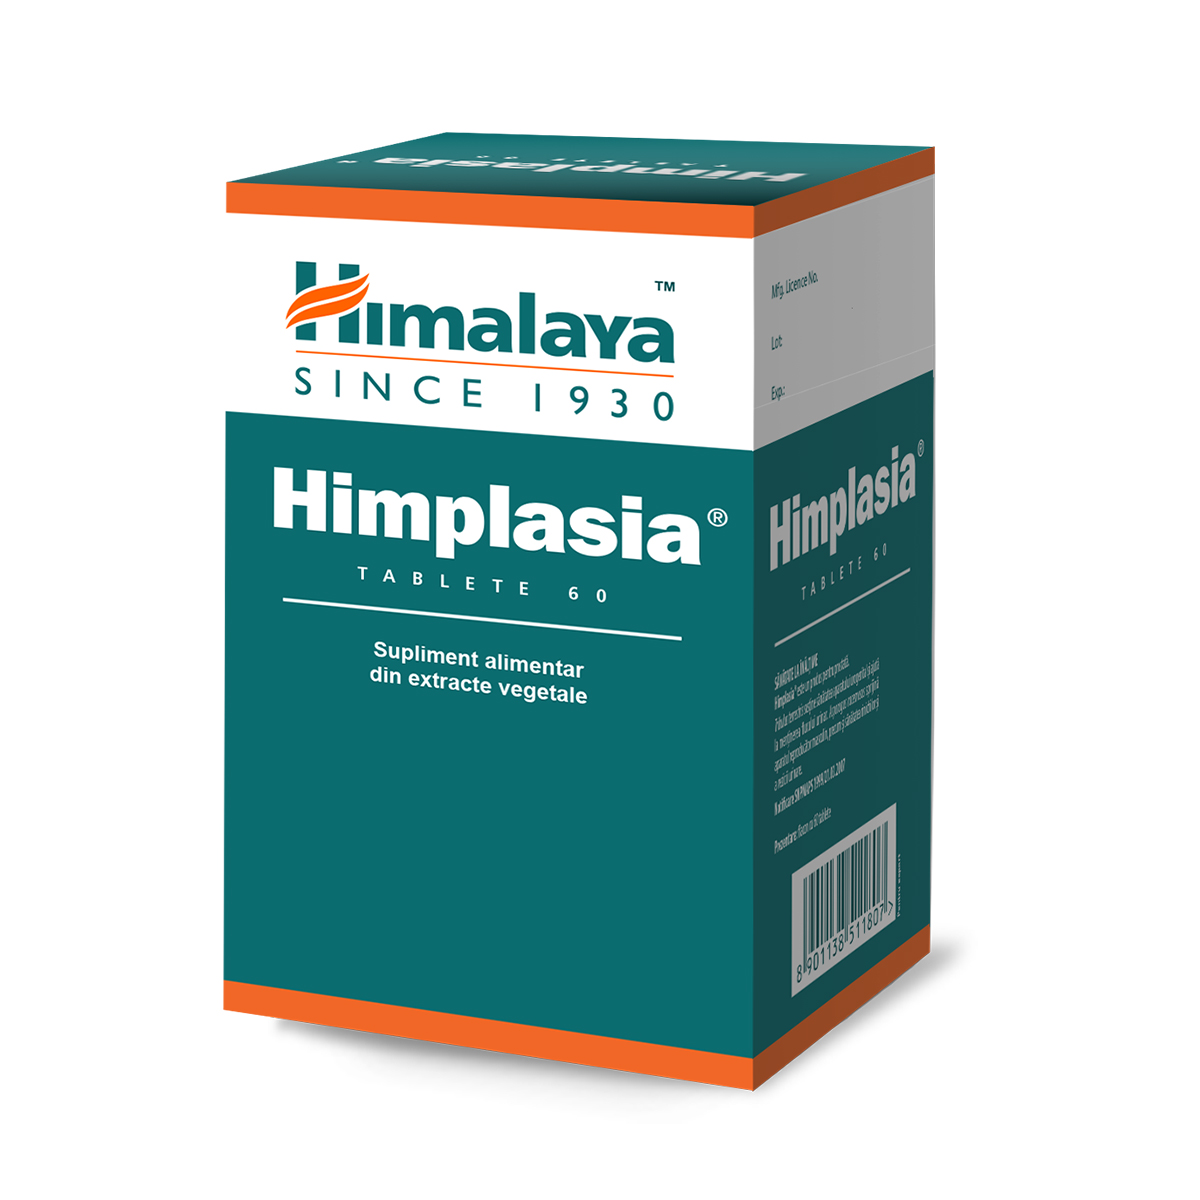 Prostata - Himplasia, 60 tablete, Himalaya, sinapis.ro